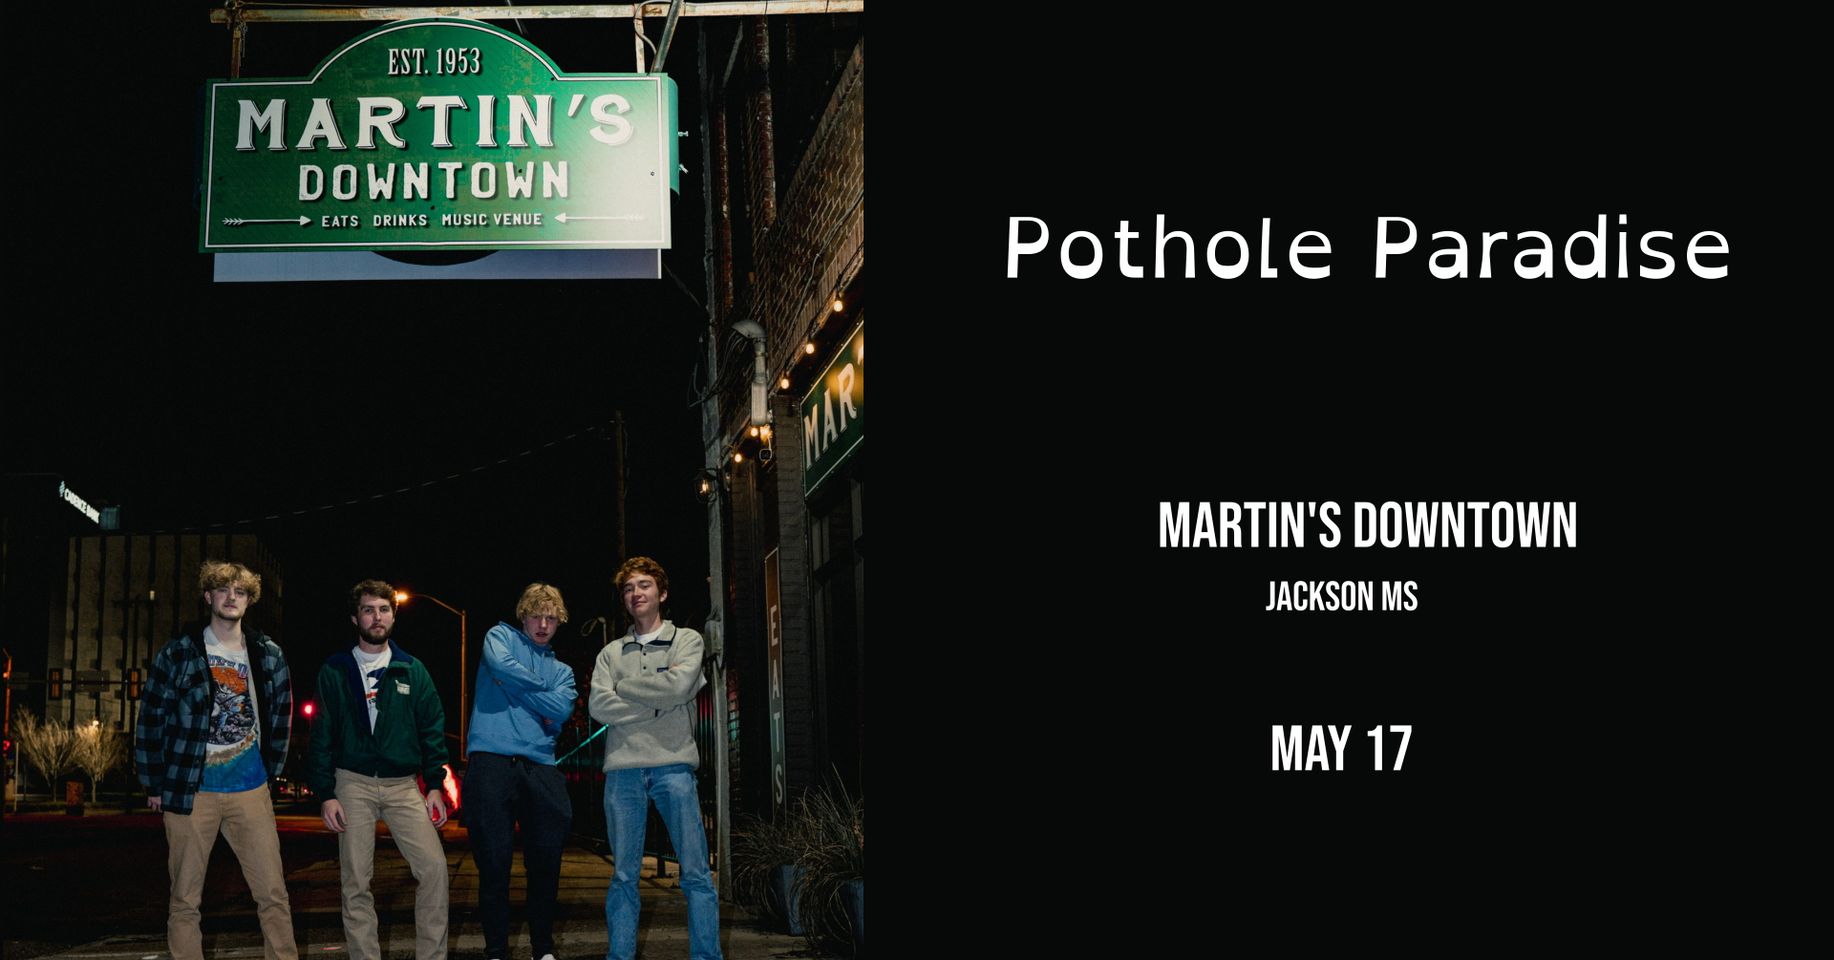 Pothole Paradise at Martin’s Downtown